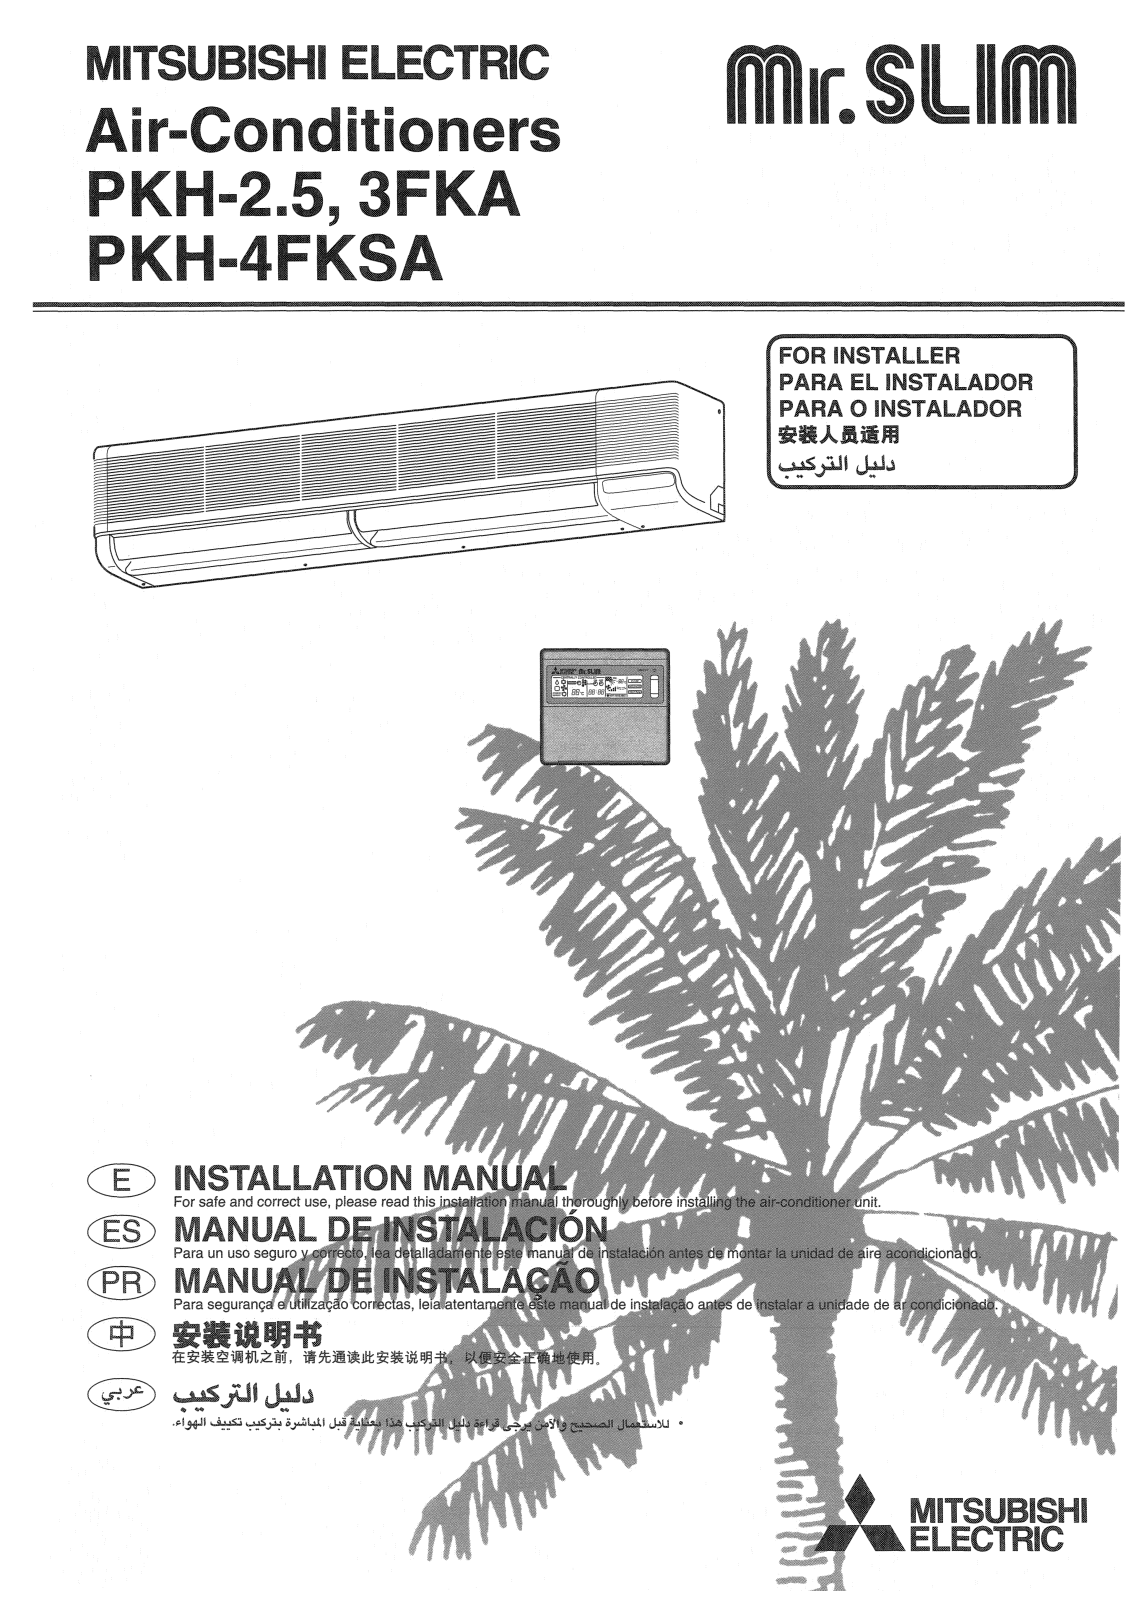 Mitsubishi Electronics PKH-2.5 3FKA, PHK-4FKSA User Manual